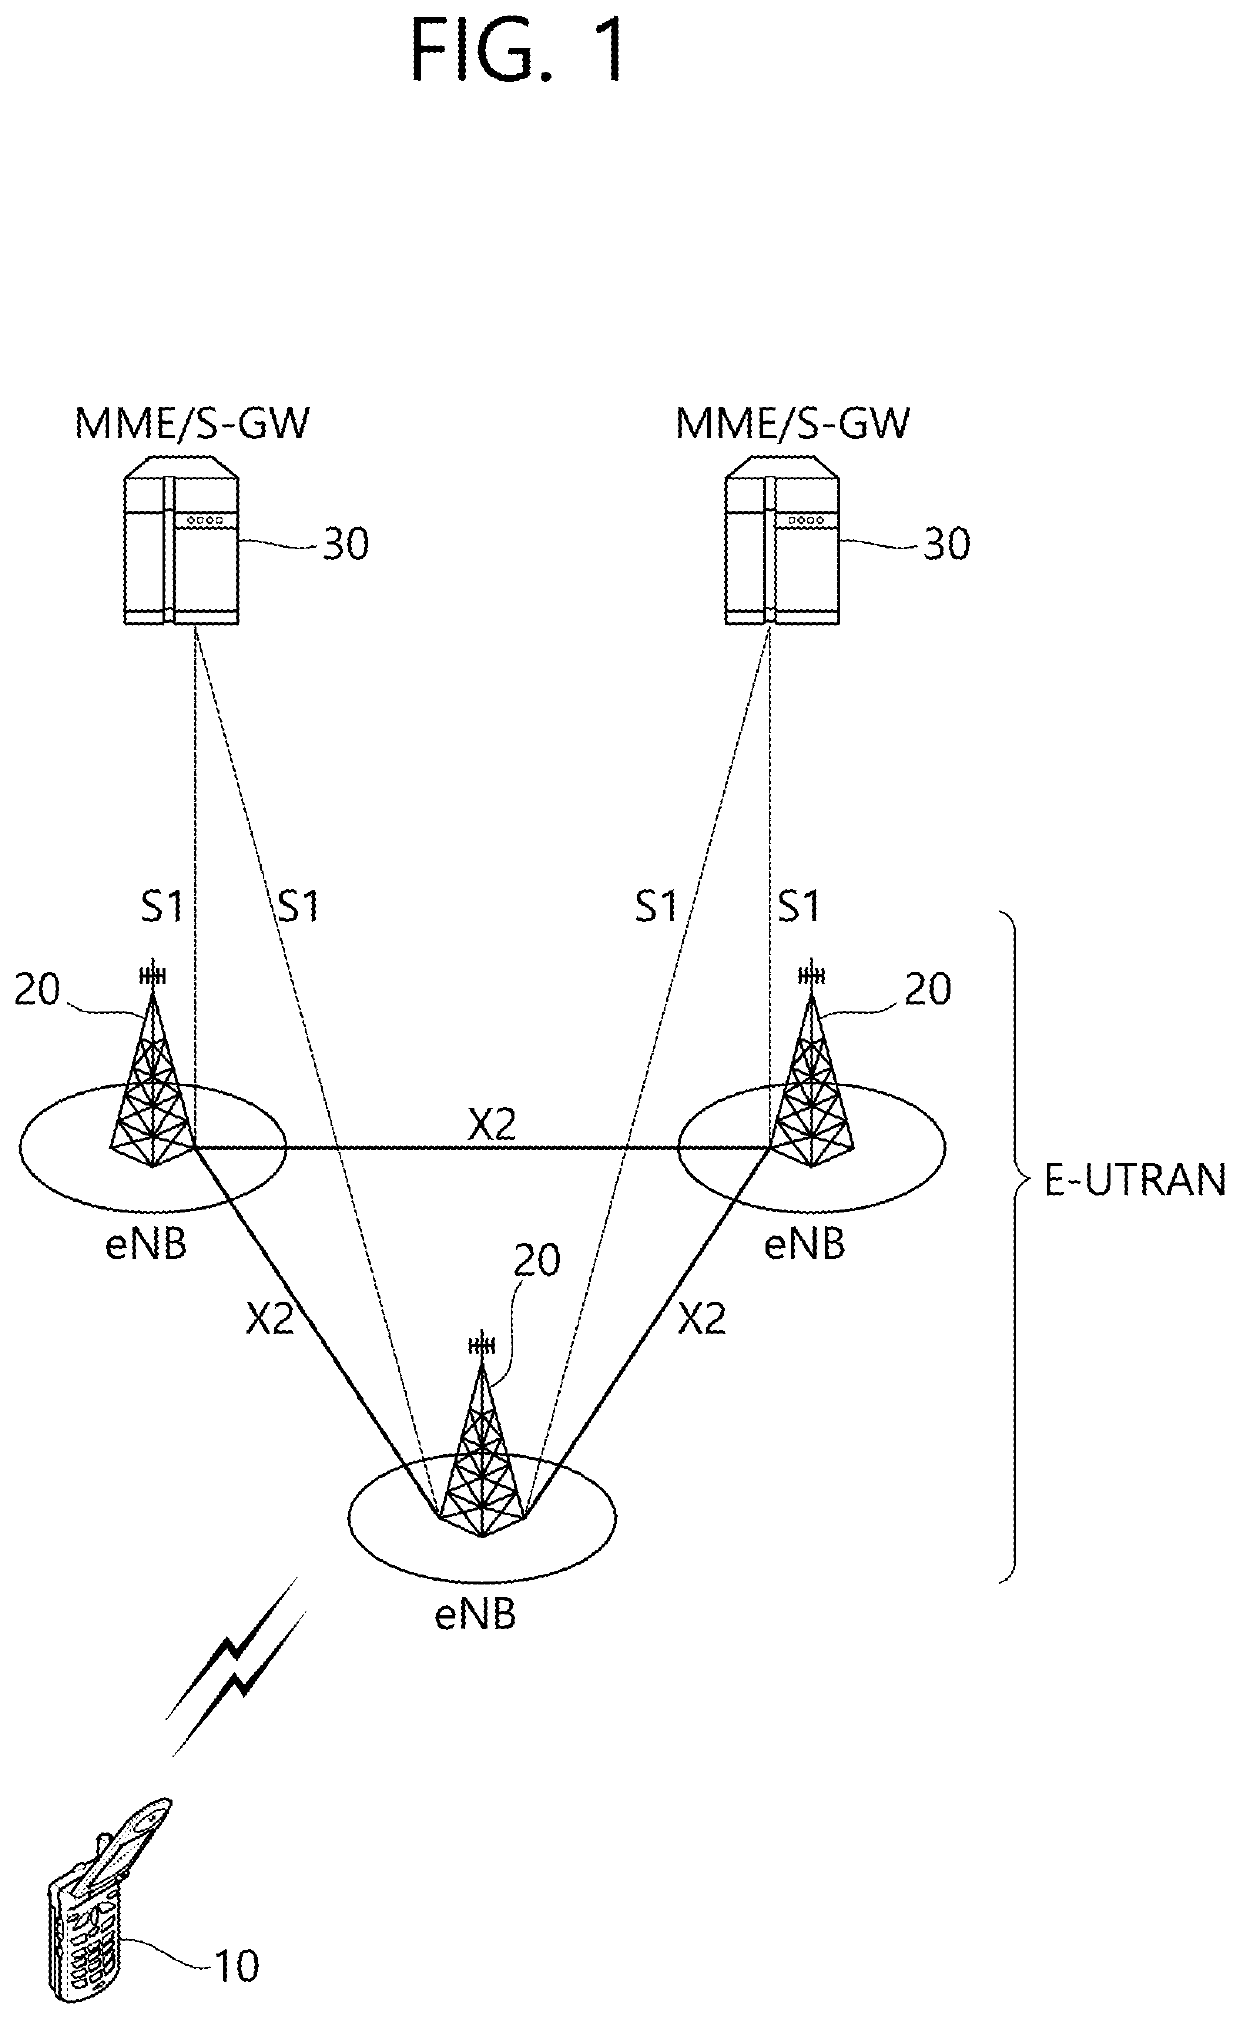 Method and apparatus for transmitting sidelink HARQ feedback in nr v2x